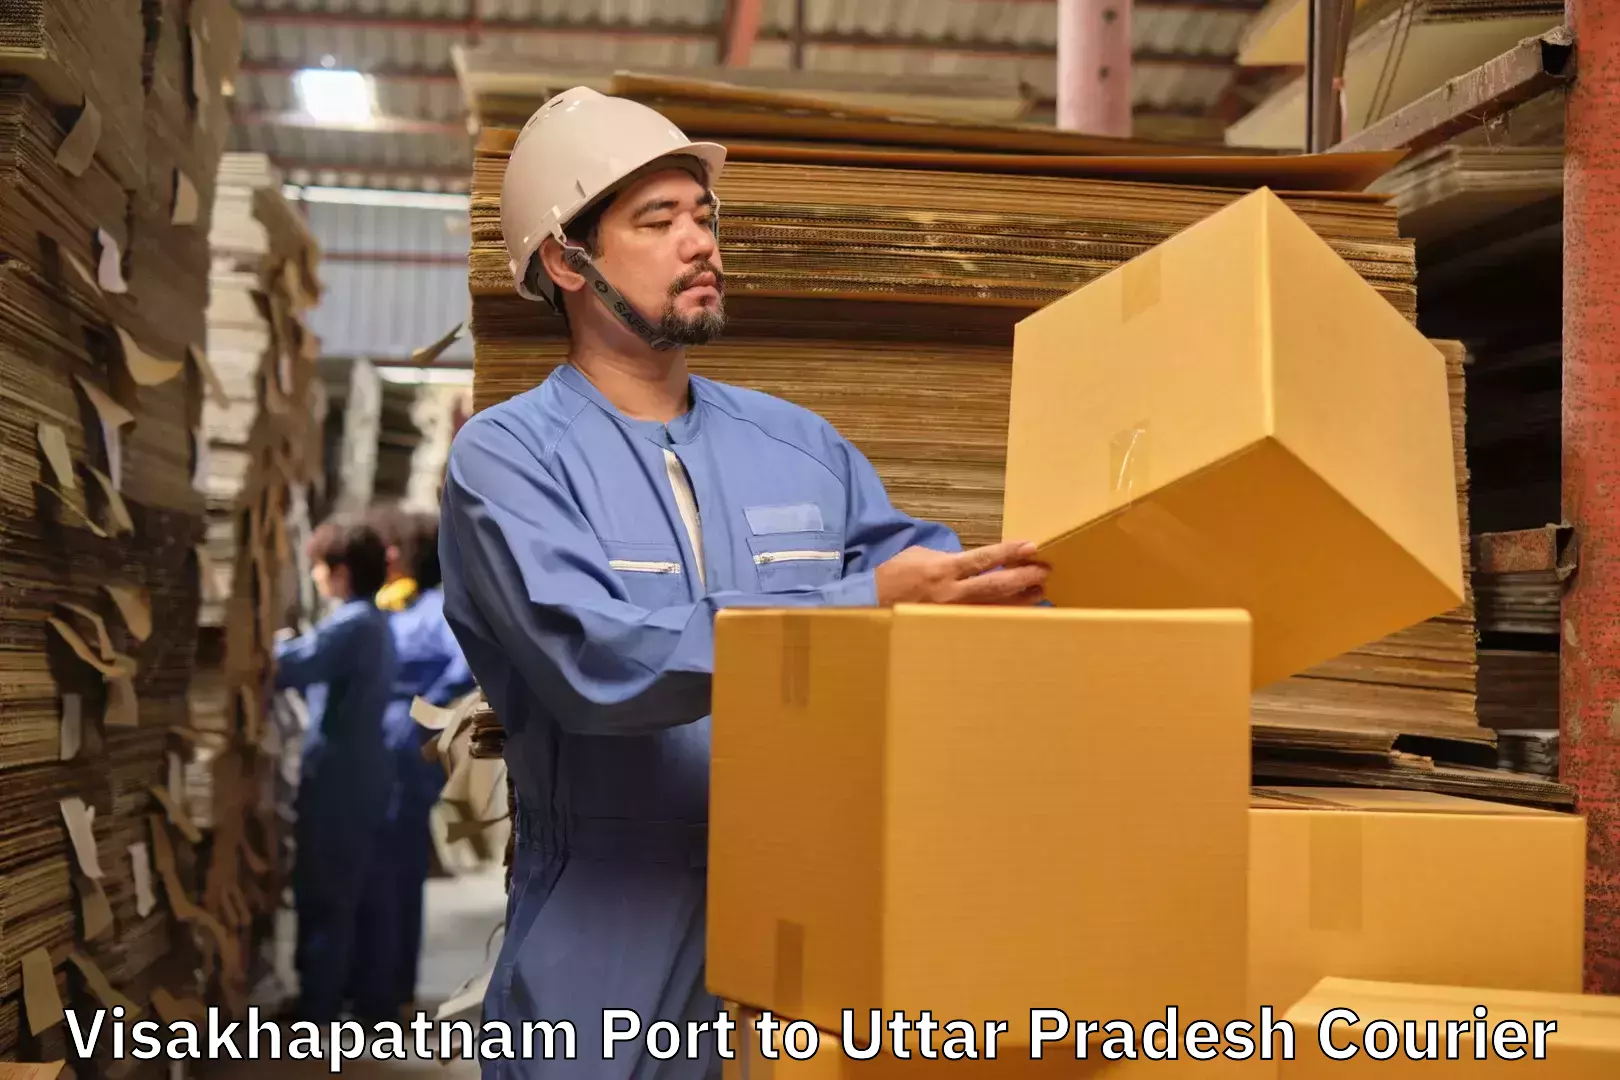 Baggage delivery technology Visakhapatnam Port to IIT Varanasi